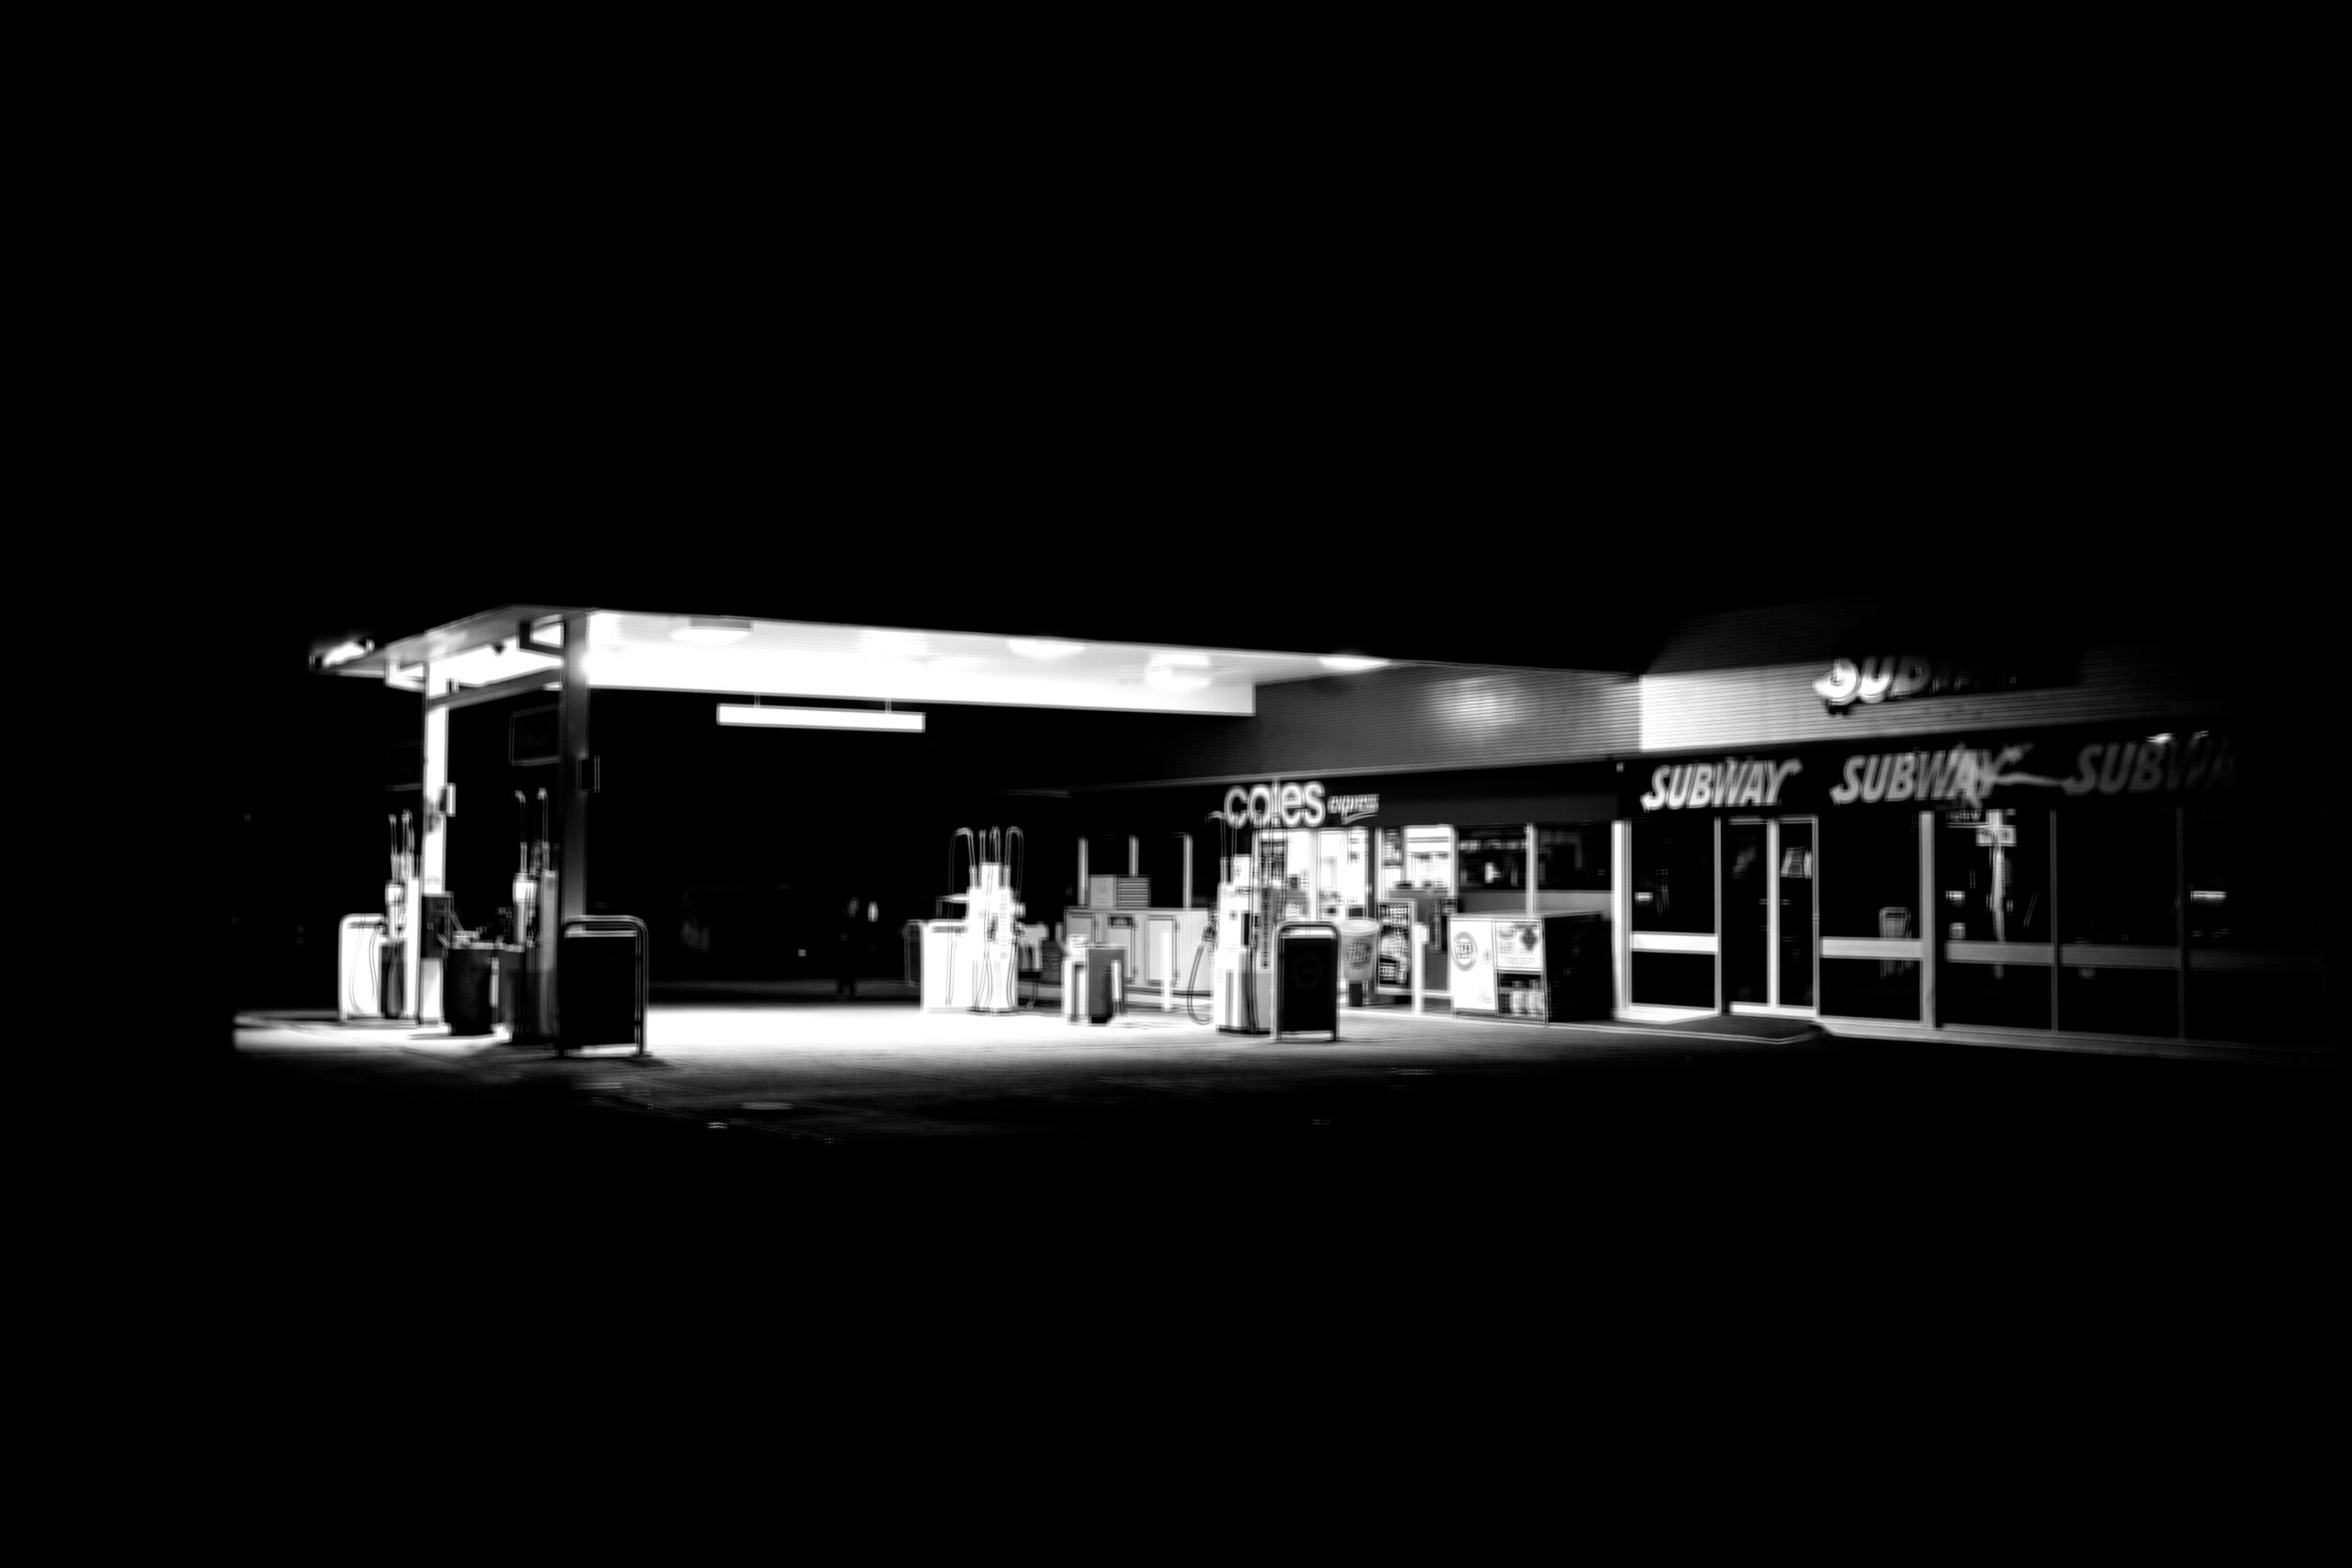 Gas station at night